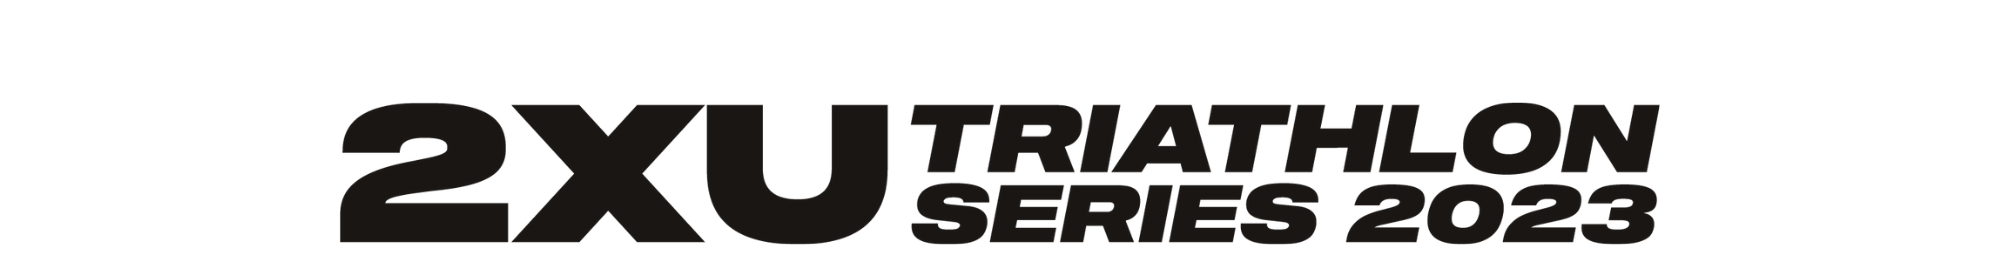 2XU Triathlon Series - 💥Race 5 & 6 - Event Postponement 💥 The